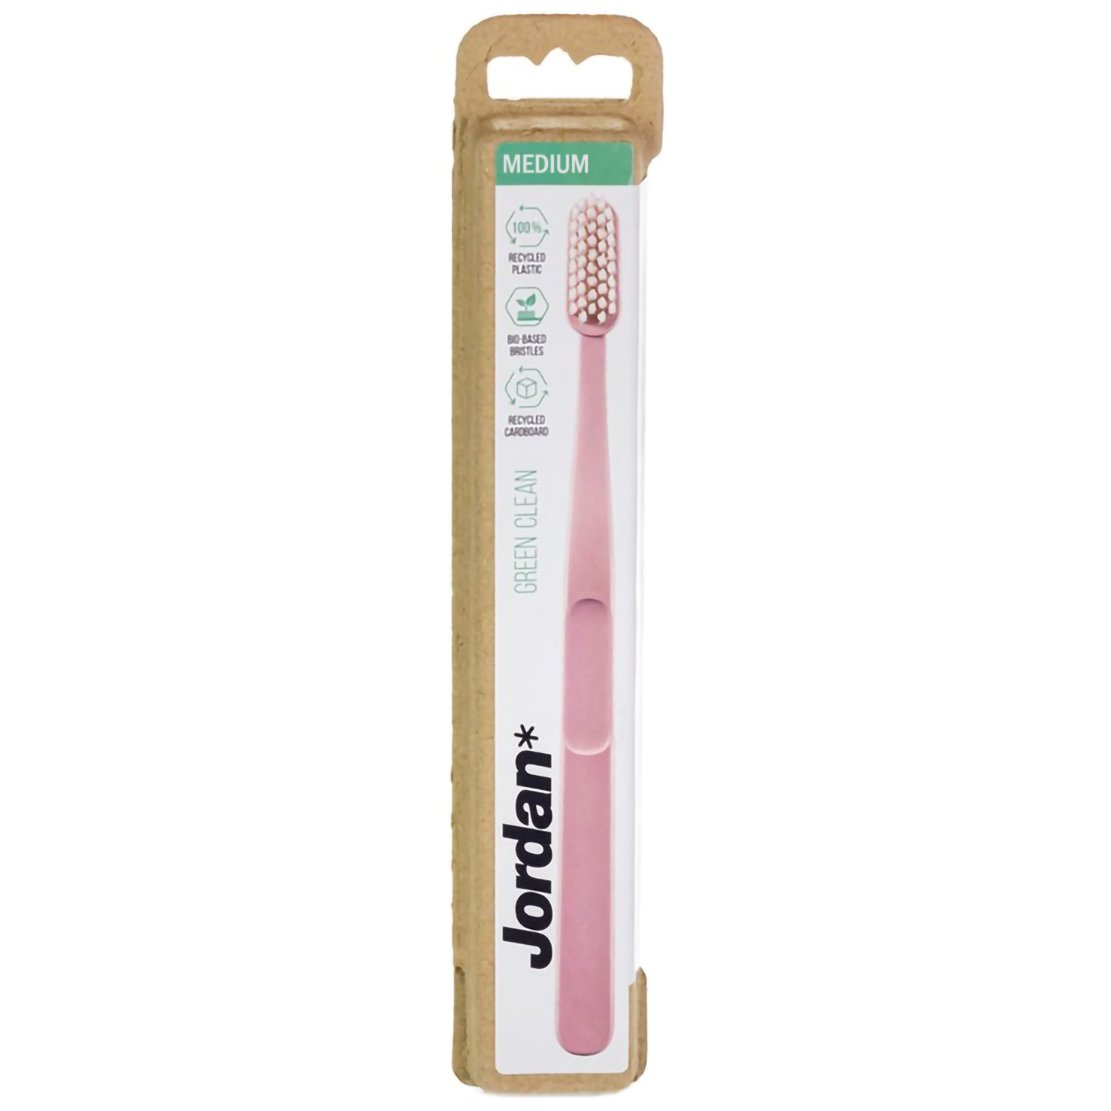 Jordan Green Clean Medium Toothbrush Bio Eco Χειροκίνητη Οδοντόβουρτσα Μέτρια, με Βιολογικής Προέλευσης Ίνες 1 Τεμάχιο – Ροζ